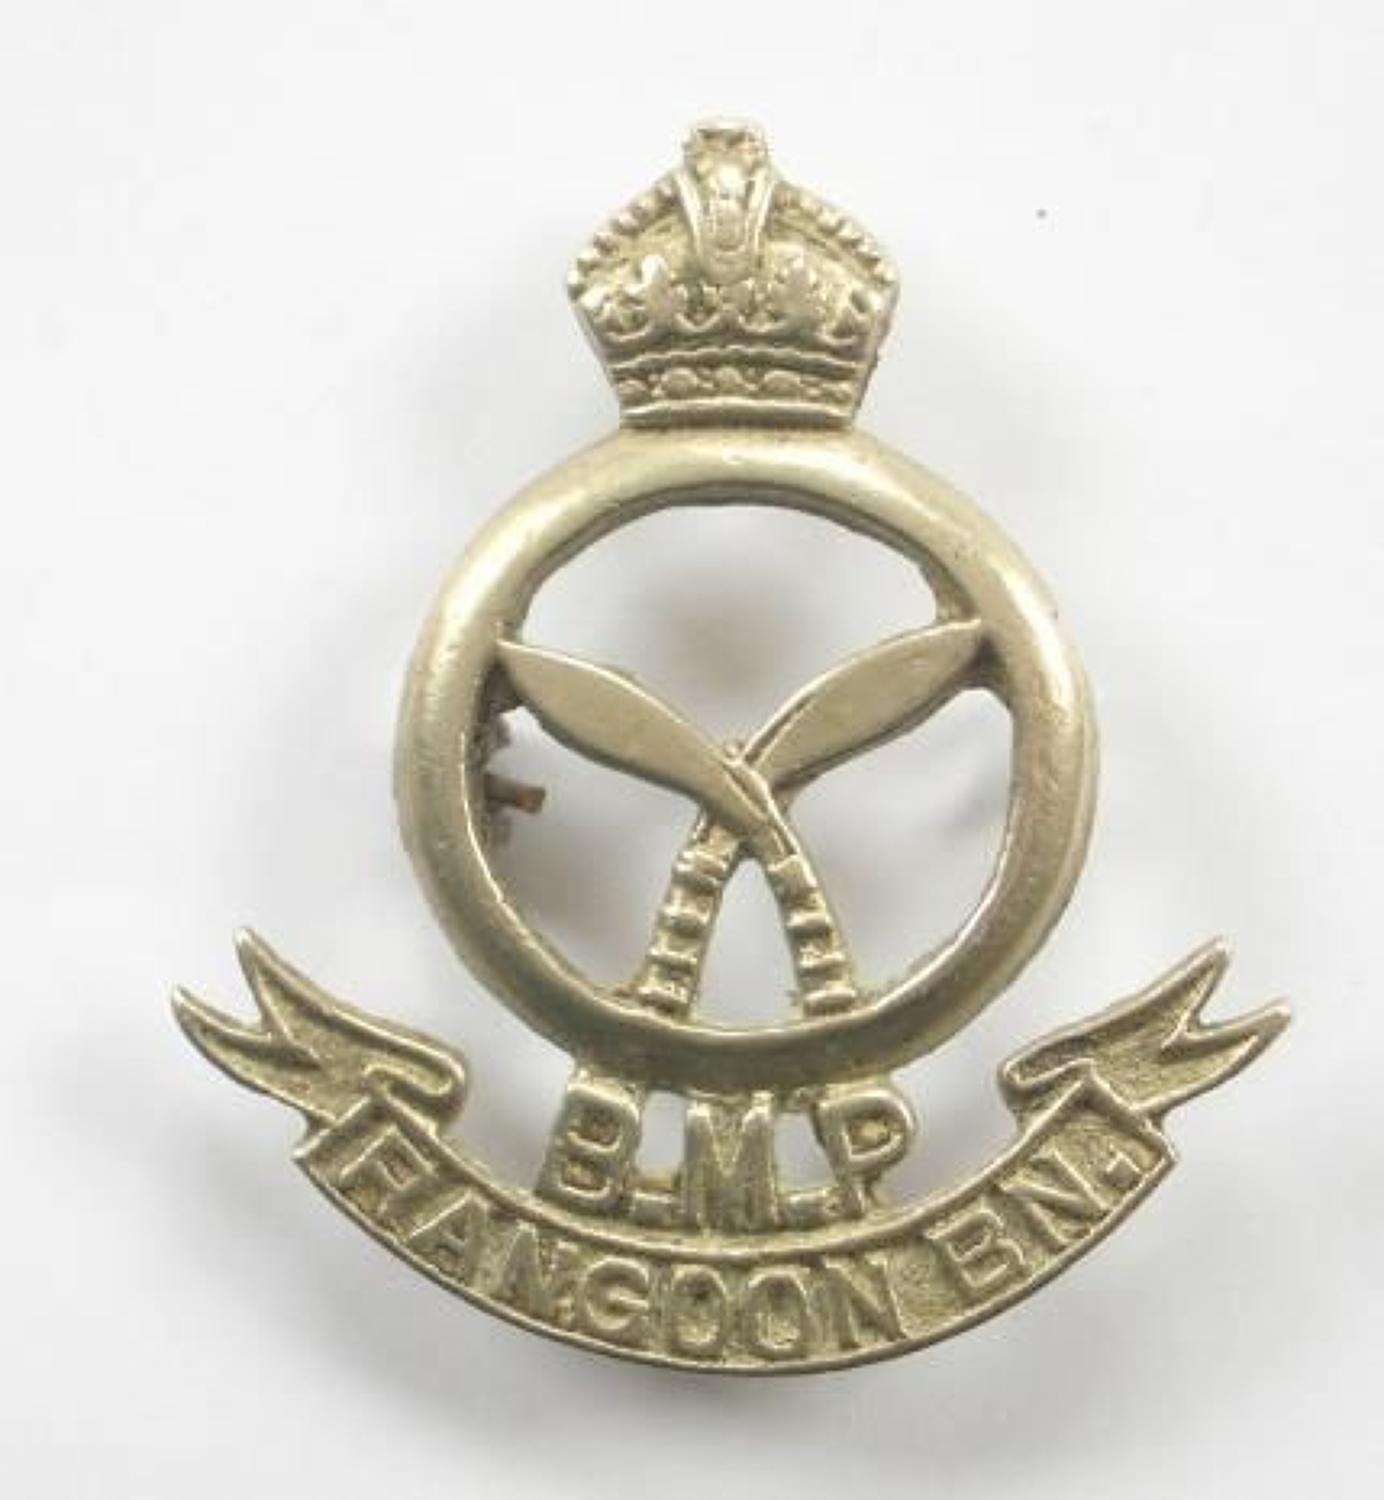 Burma Rangoon Battalion Burma Military Police rare cap / pagri badge